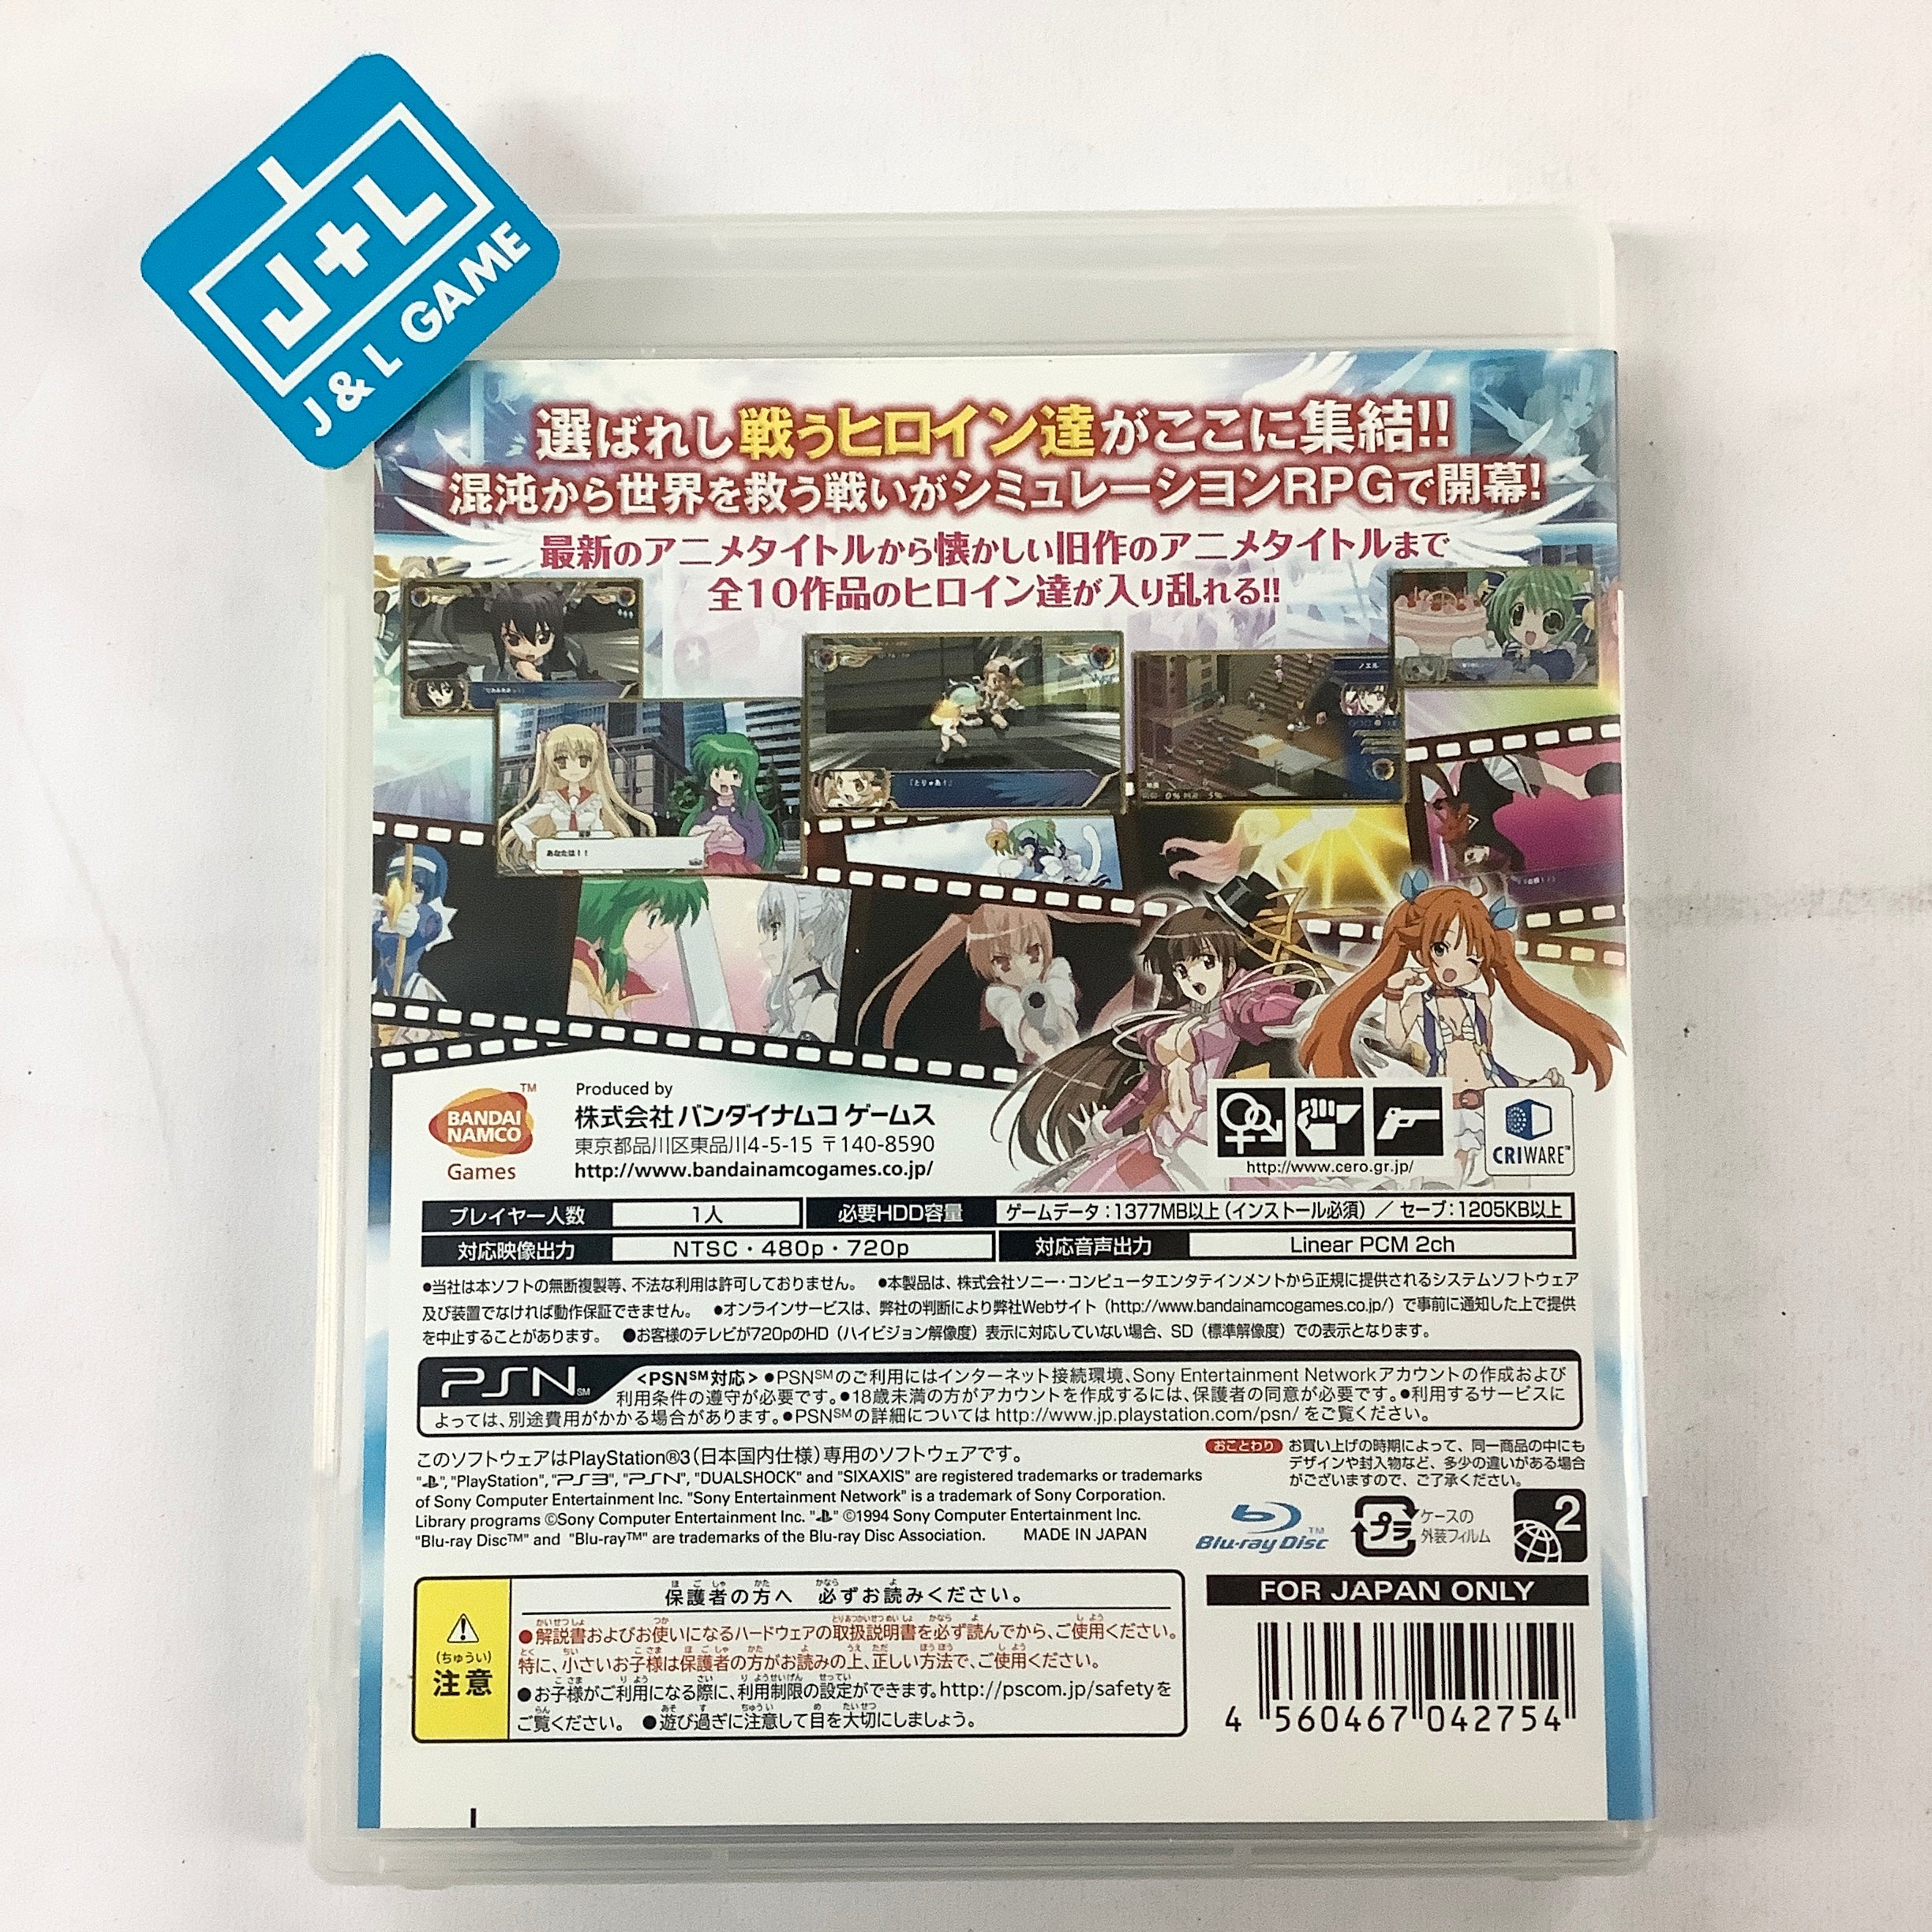 Super Heroine Chronicle: Chou Heroine Senki - (PS3) PlayStation 3 [Pre-Owned] (Japanese Import) Video Games Bandai Namco Games   